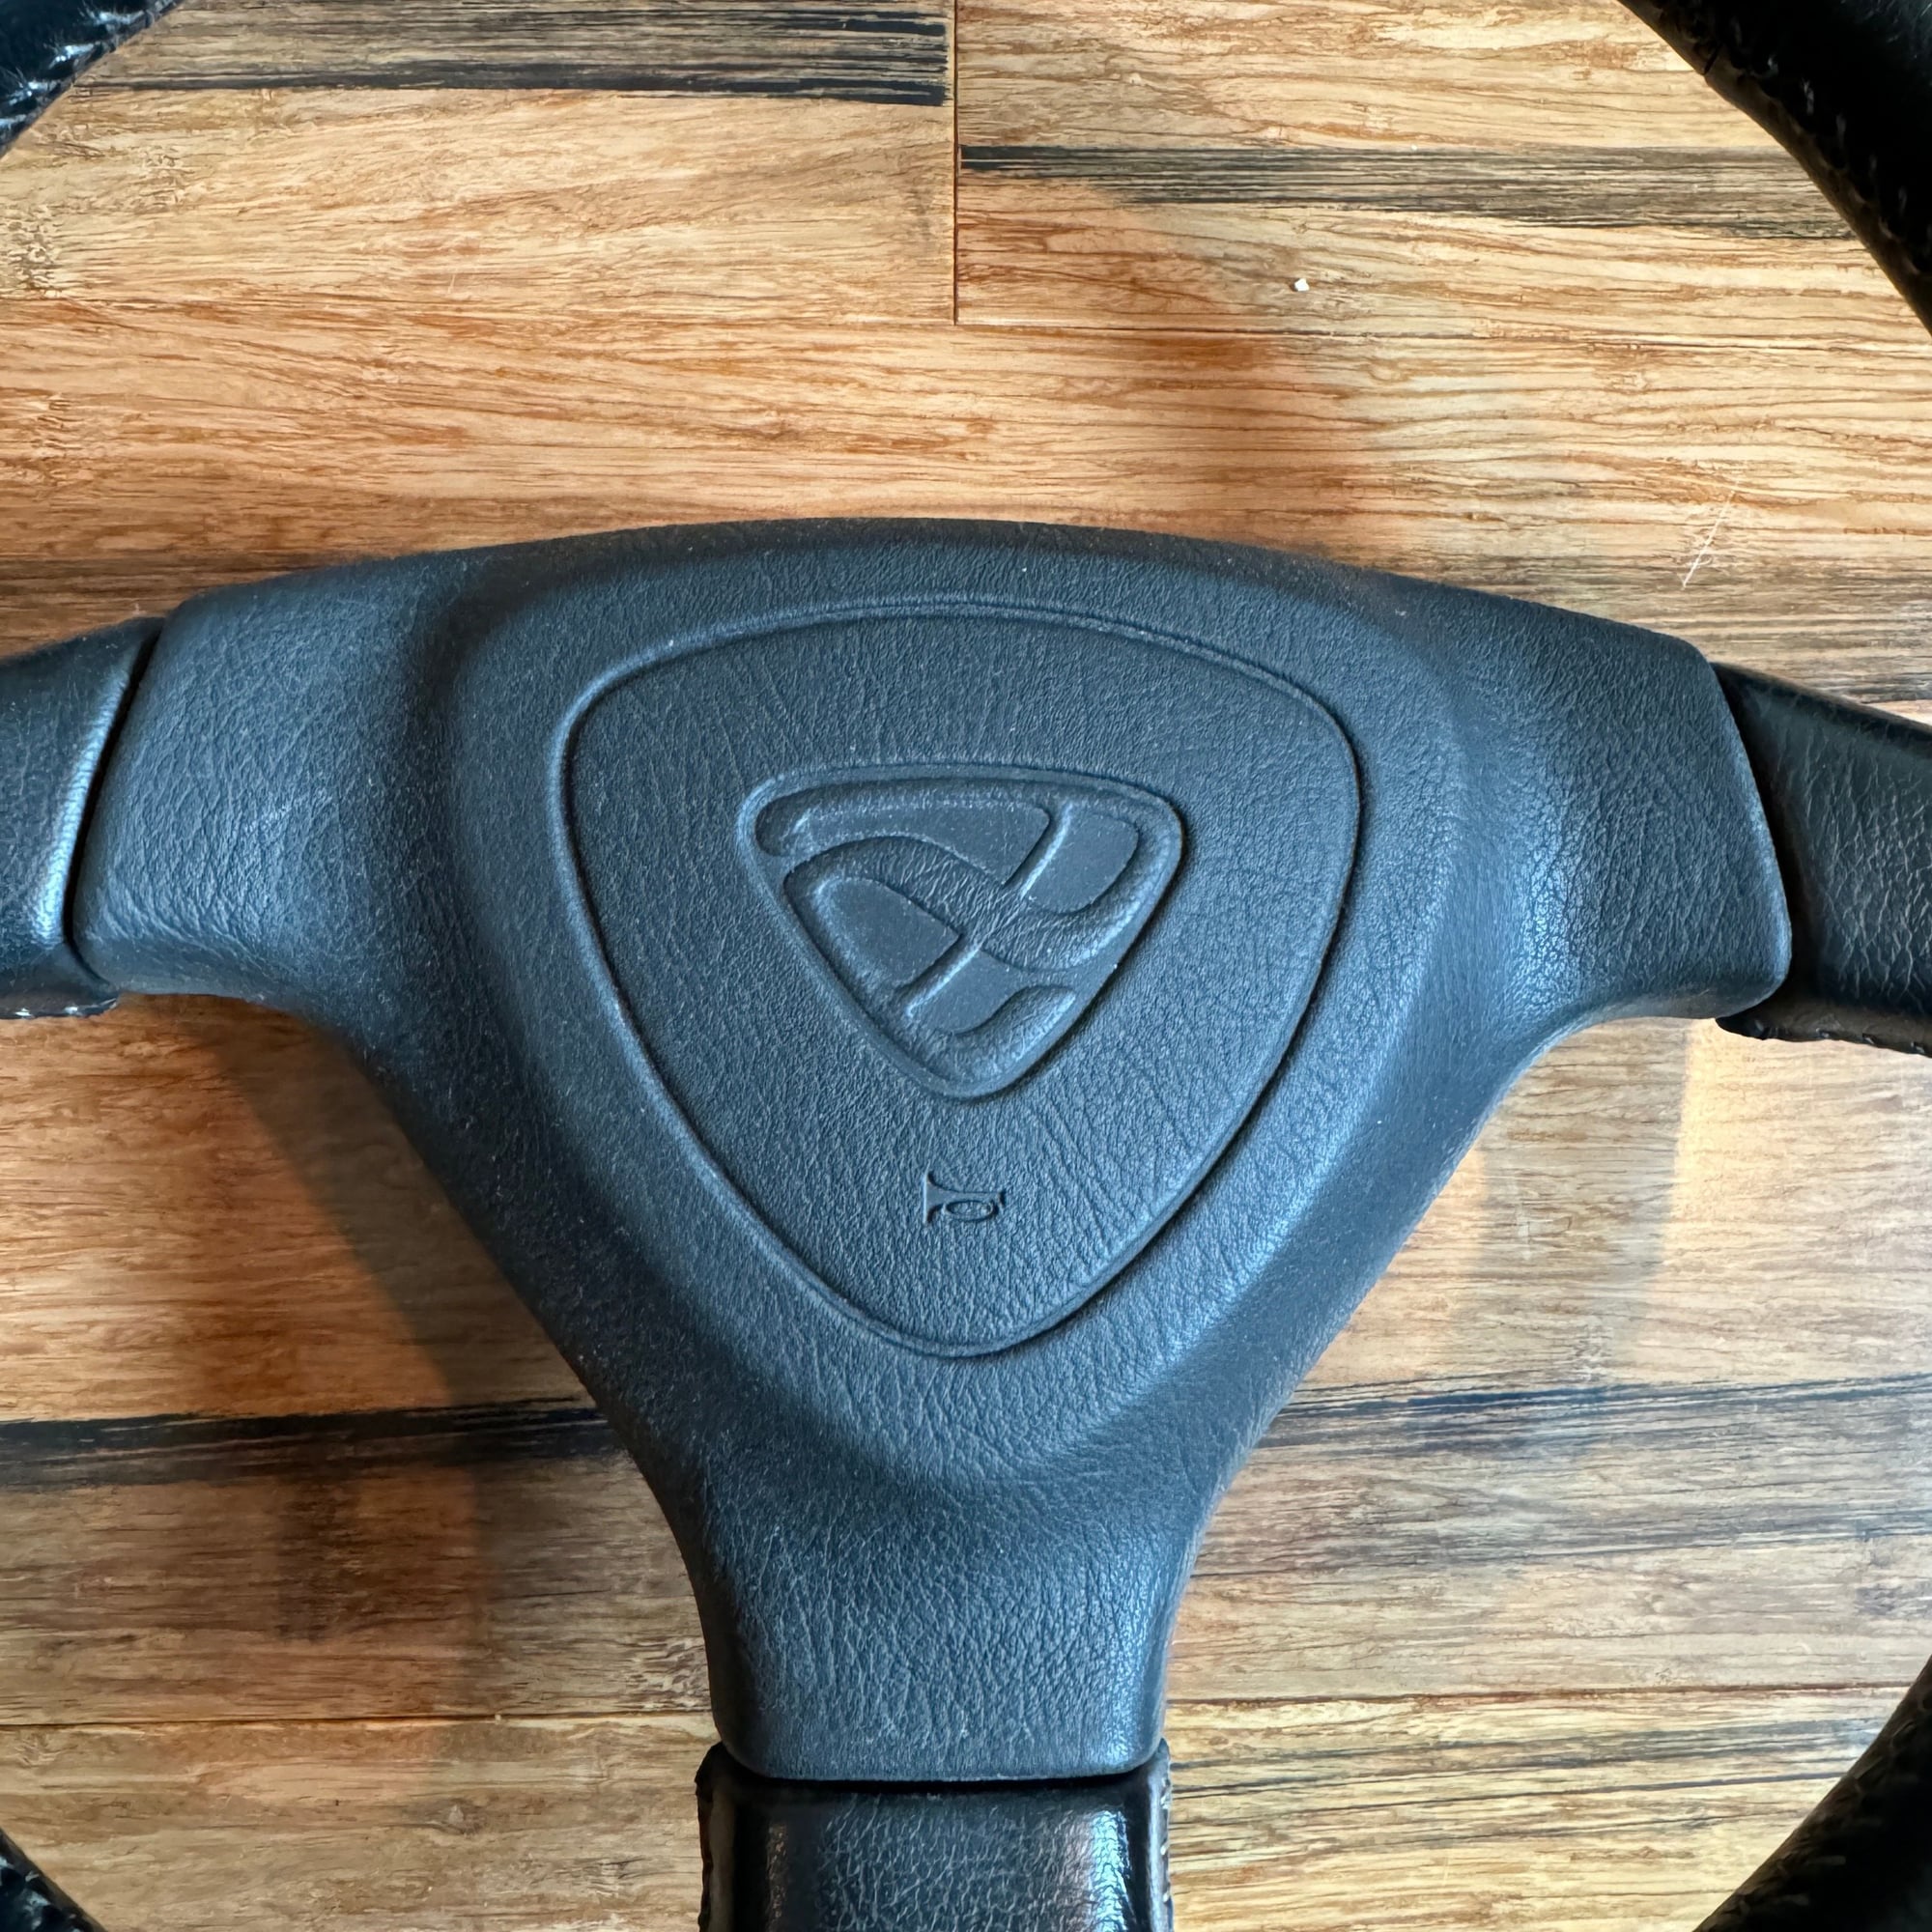 Interior/Upholstery - Super Clean Original Efini Steering Wheel - Used - Birmingham, MI 48323, United States